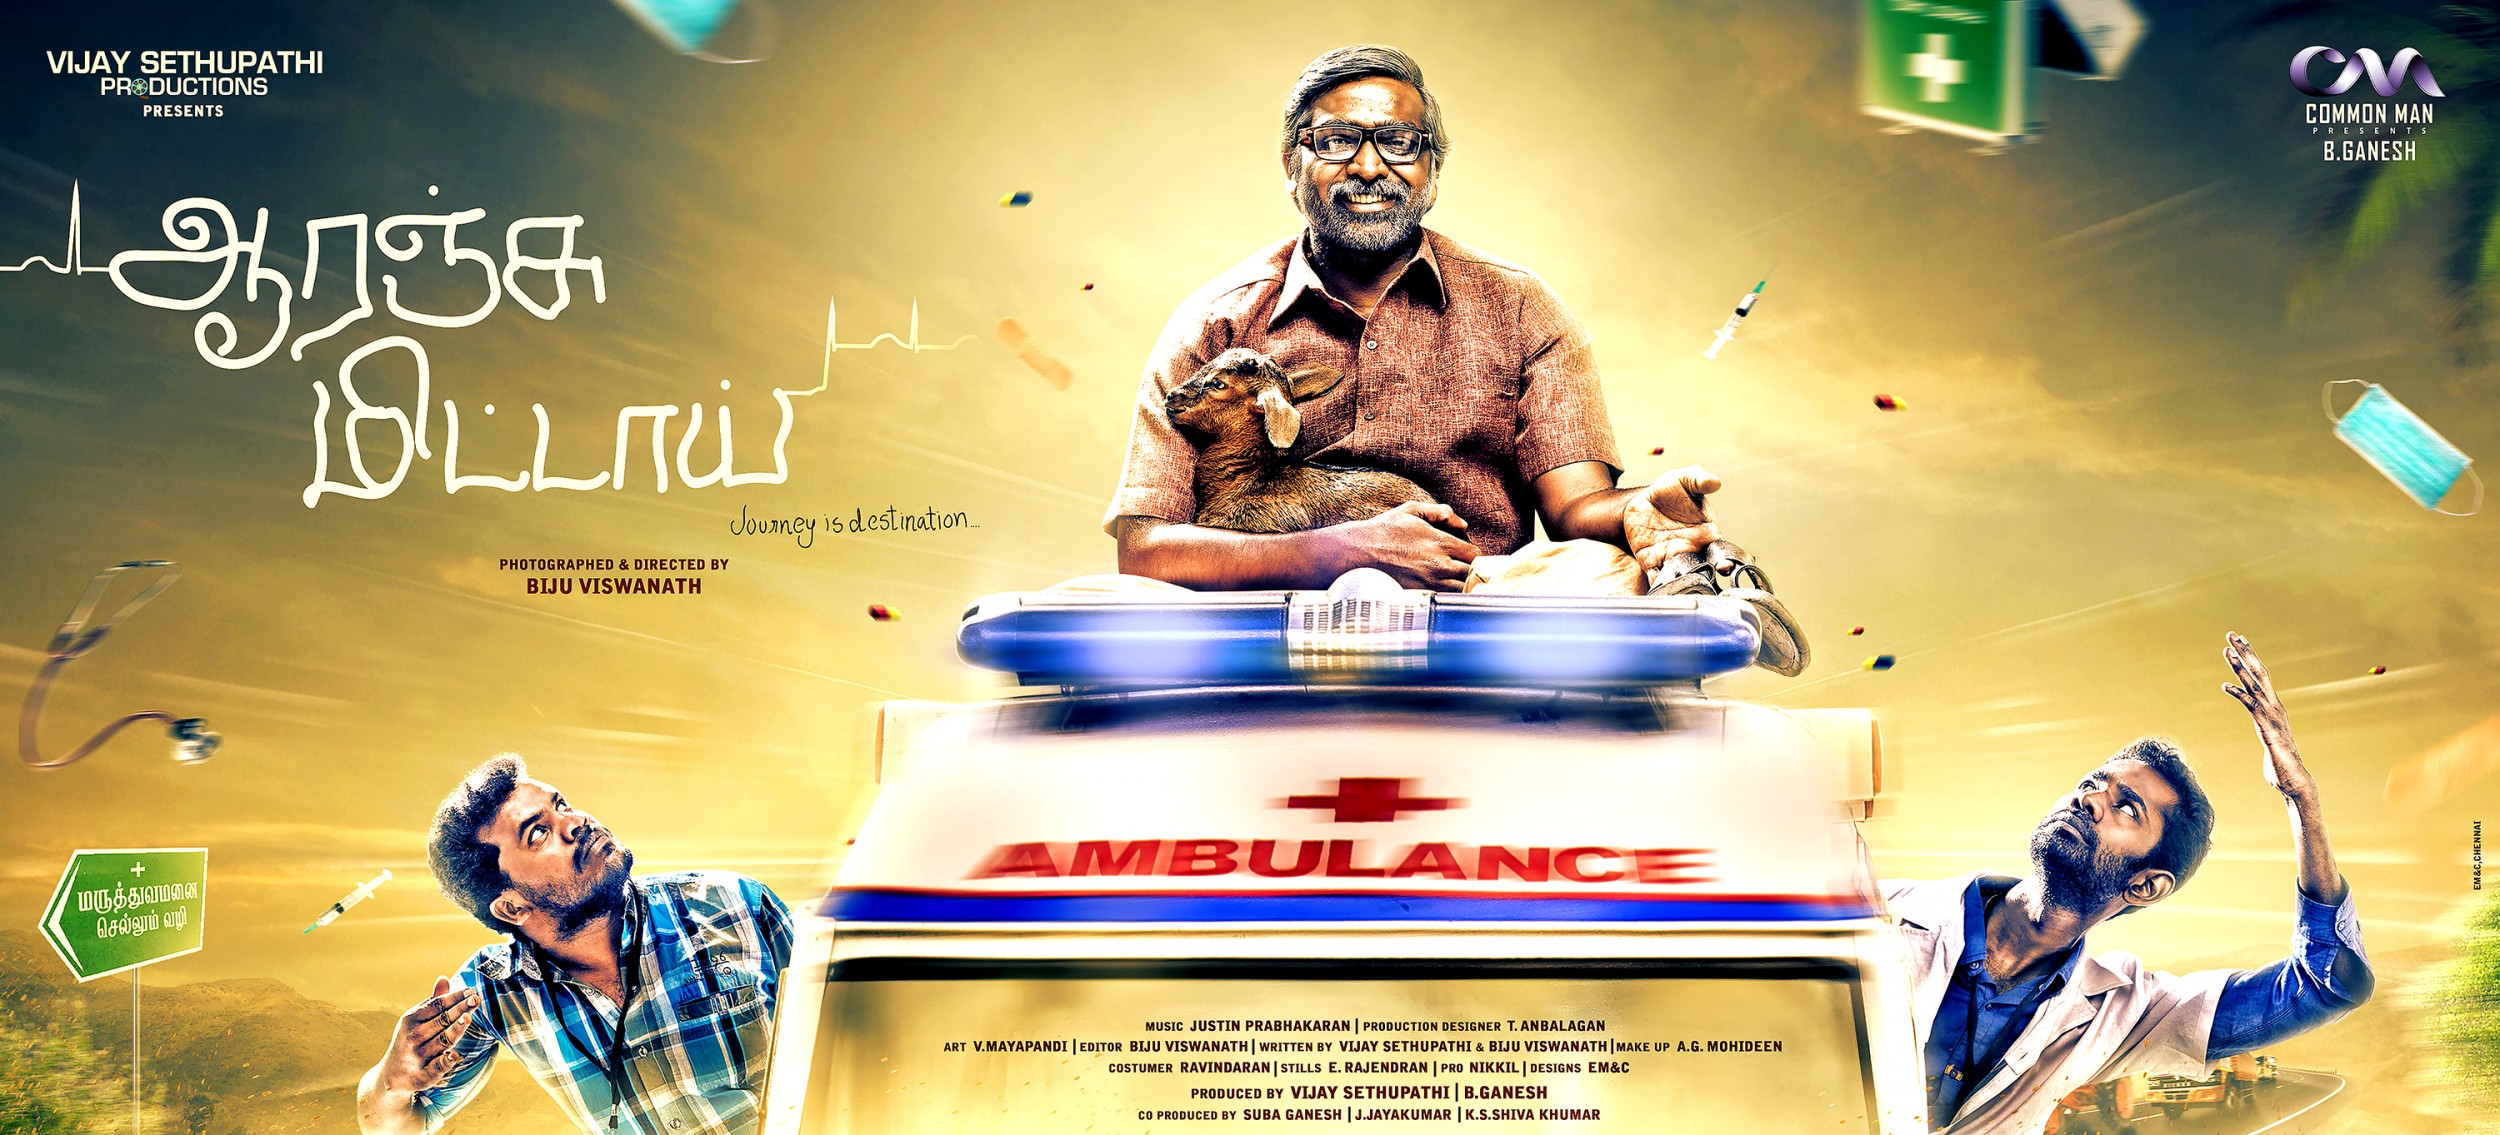 Mega Sized Movie Poster Image for Orange Mittai 